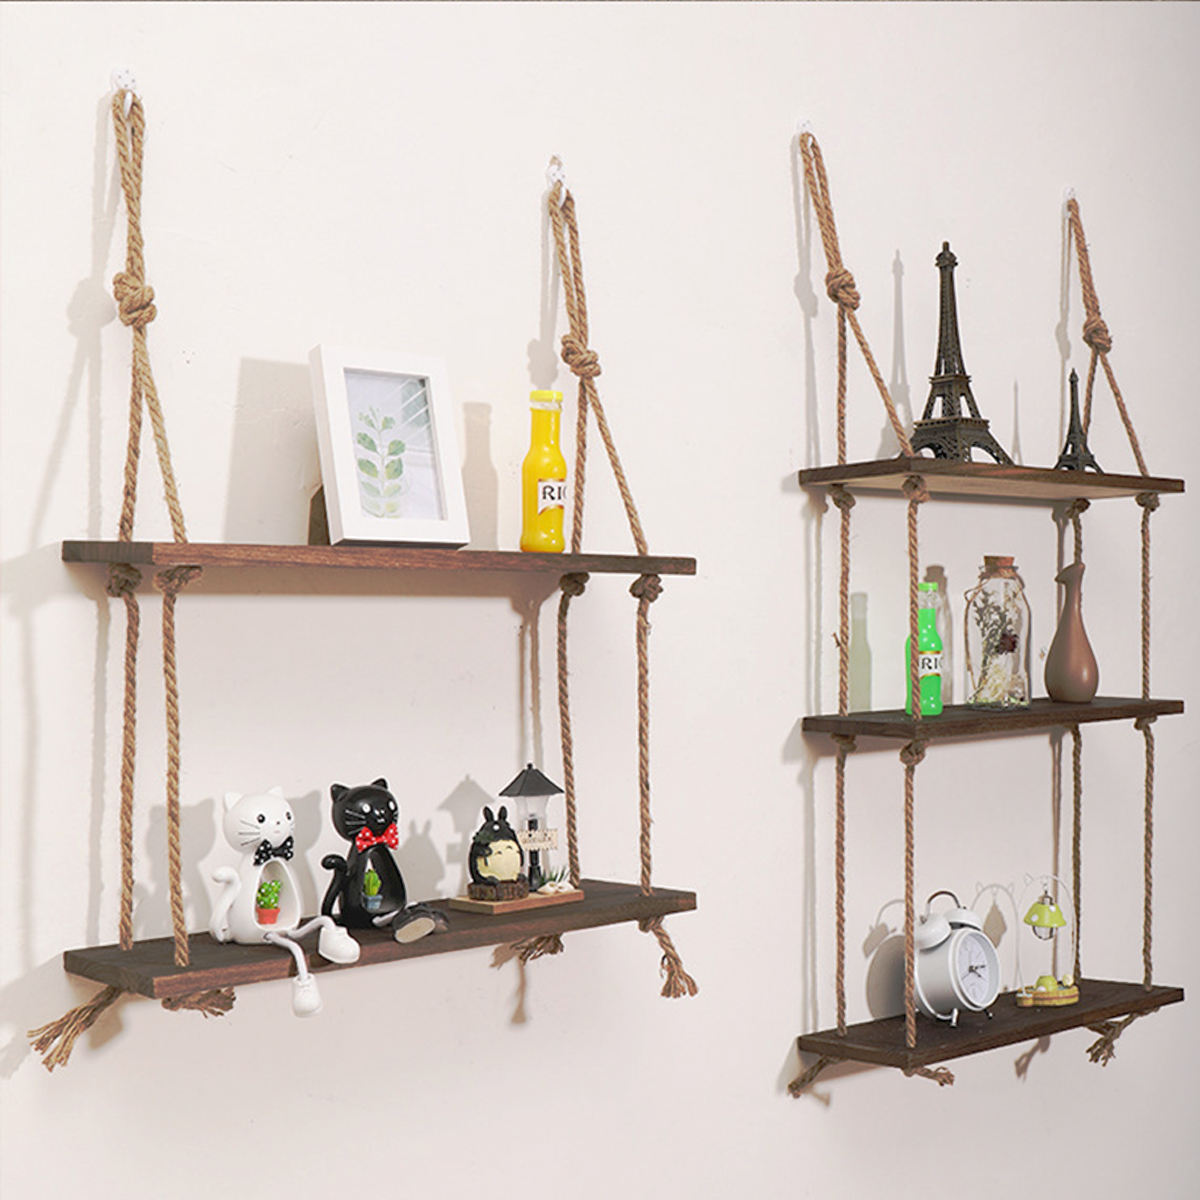 3-Tier-Wood-Wall-Mount-Shelf-Stand-Storage-Book-Shelves-Display-Rack-Shelving-Bracket-Bathroom-1363694-2